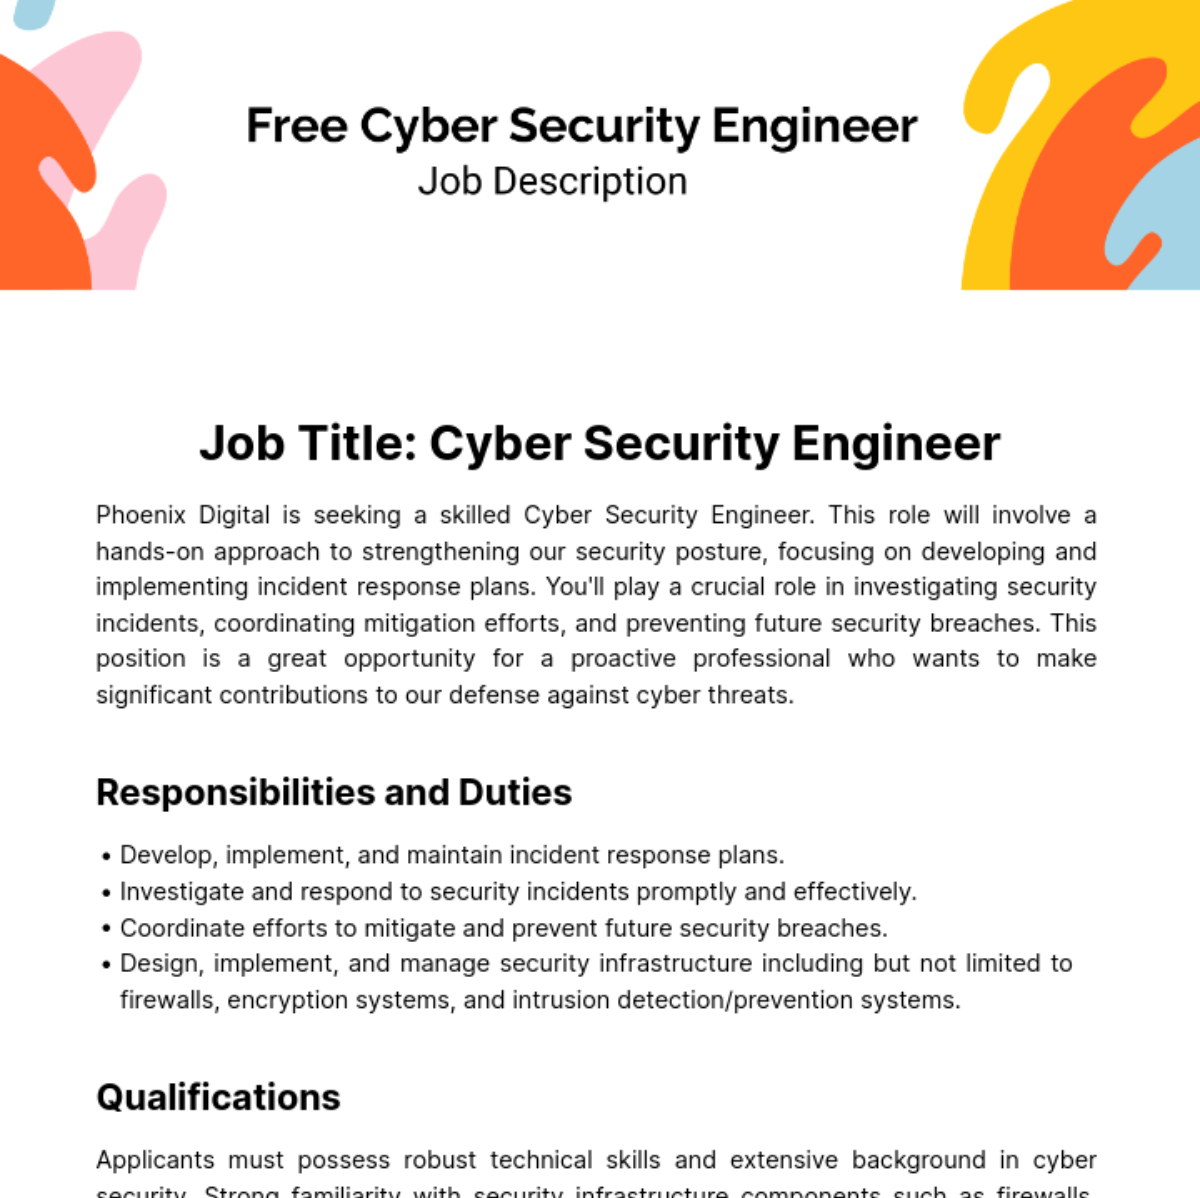 Free Cyber Security Engineer Job Description Template